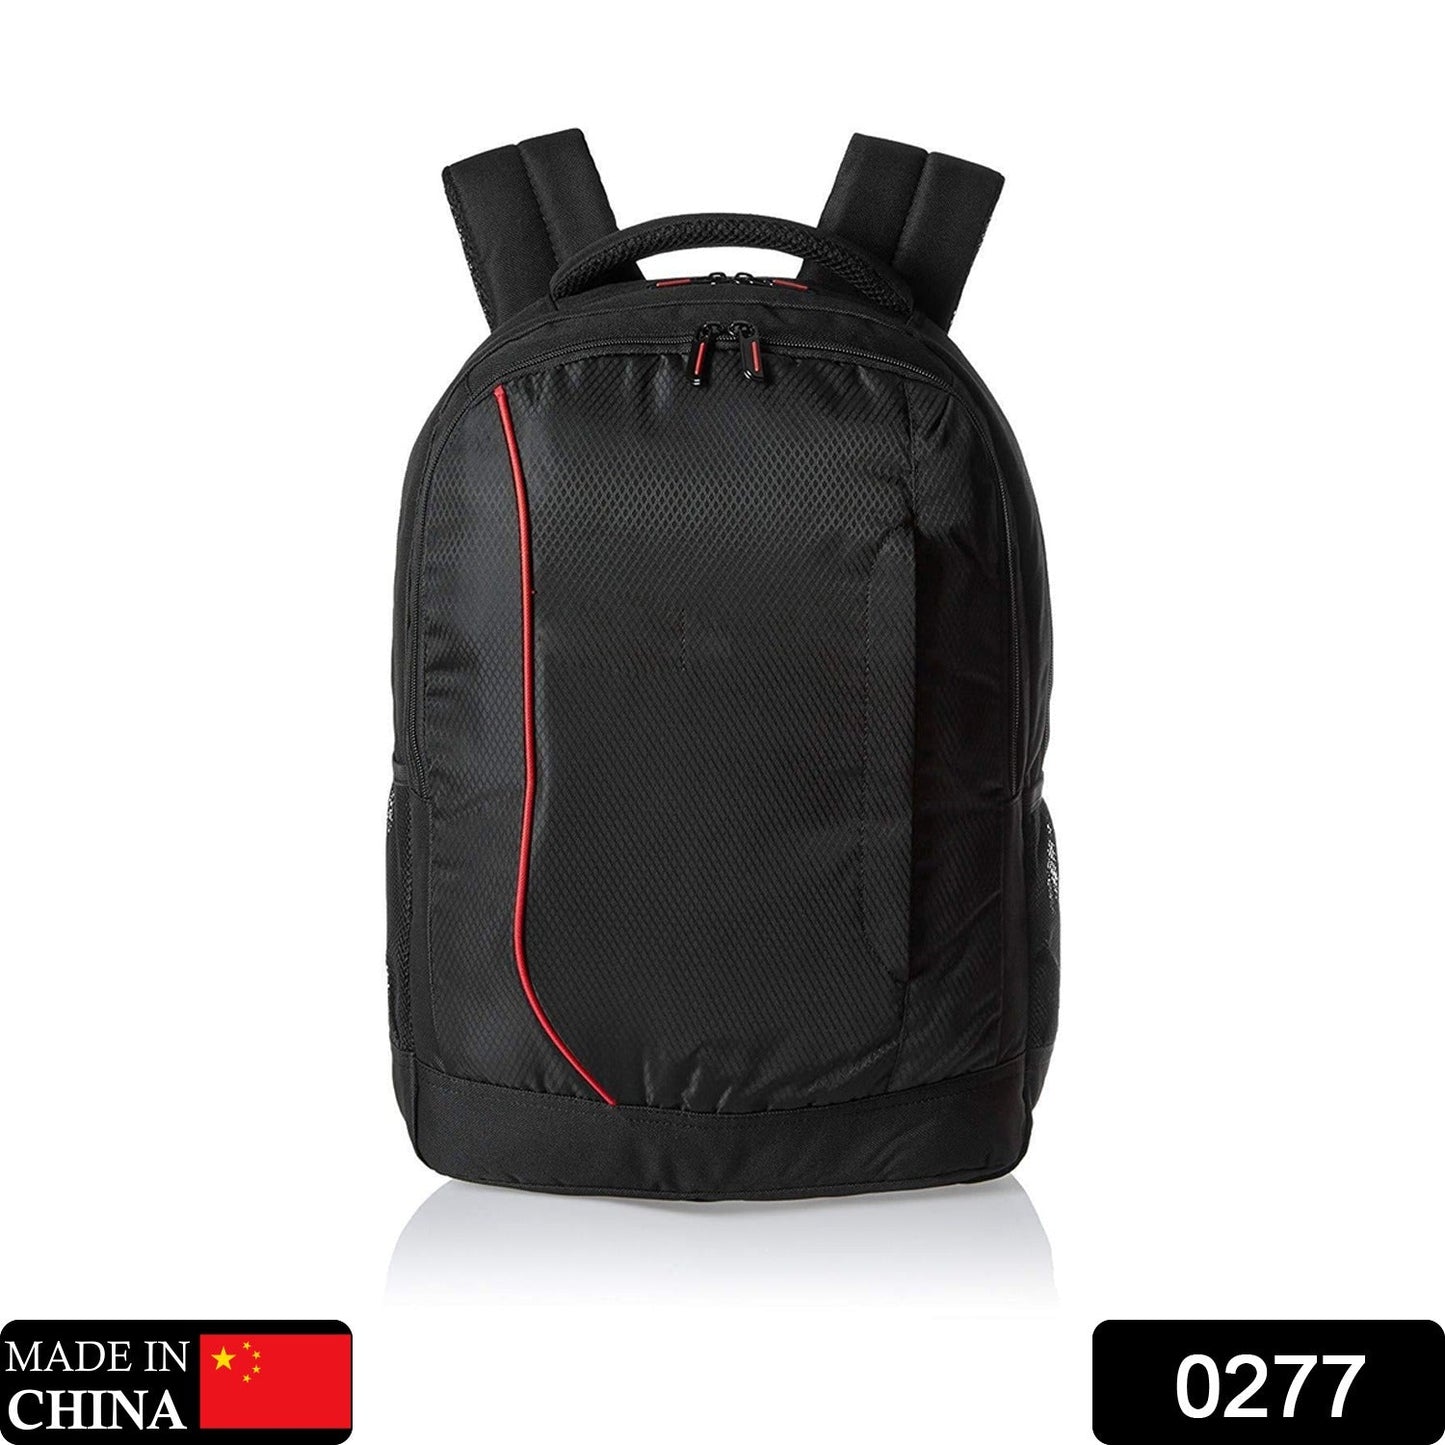 Laptop Shoulder Bag Office Business Professional Travel Bag For Men And Women Water Proof Formal Bags